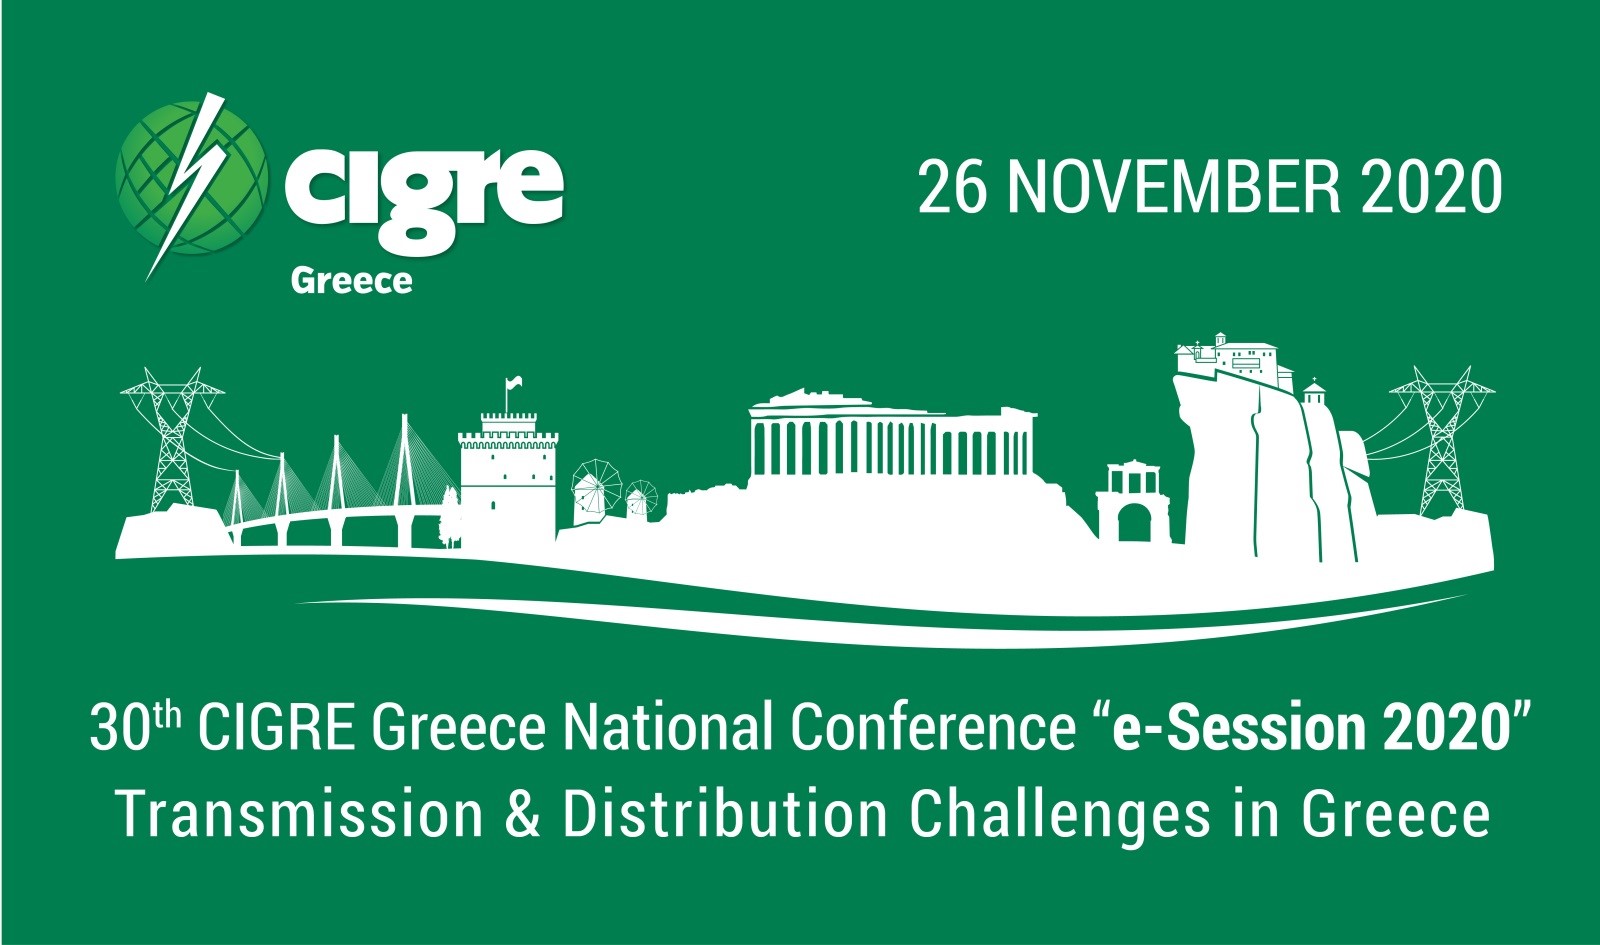 30th CIGRE Greece National Conference “e-Session 2020”